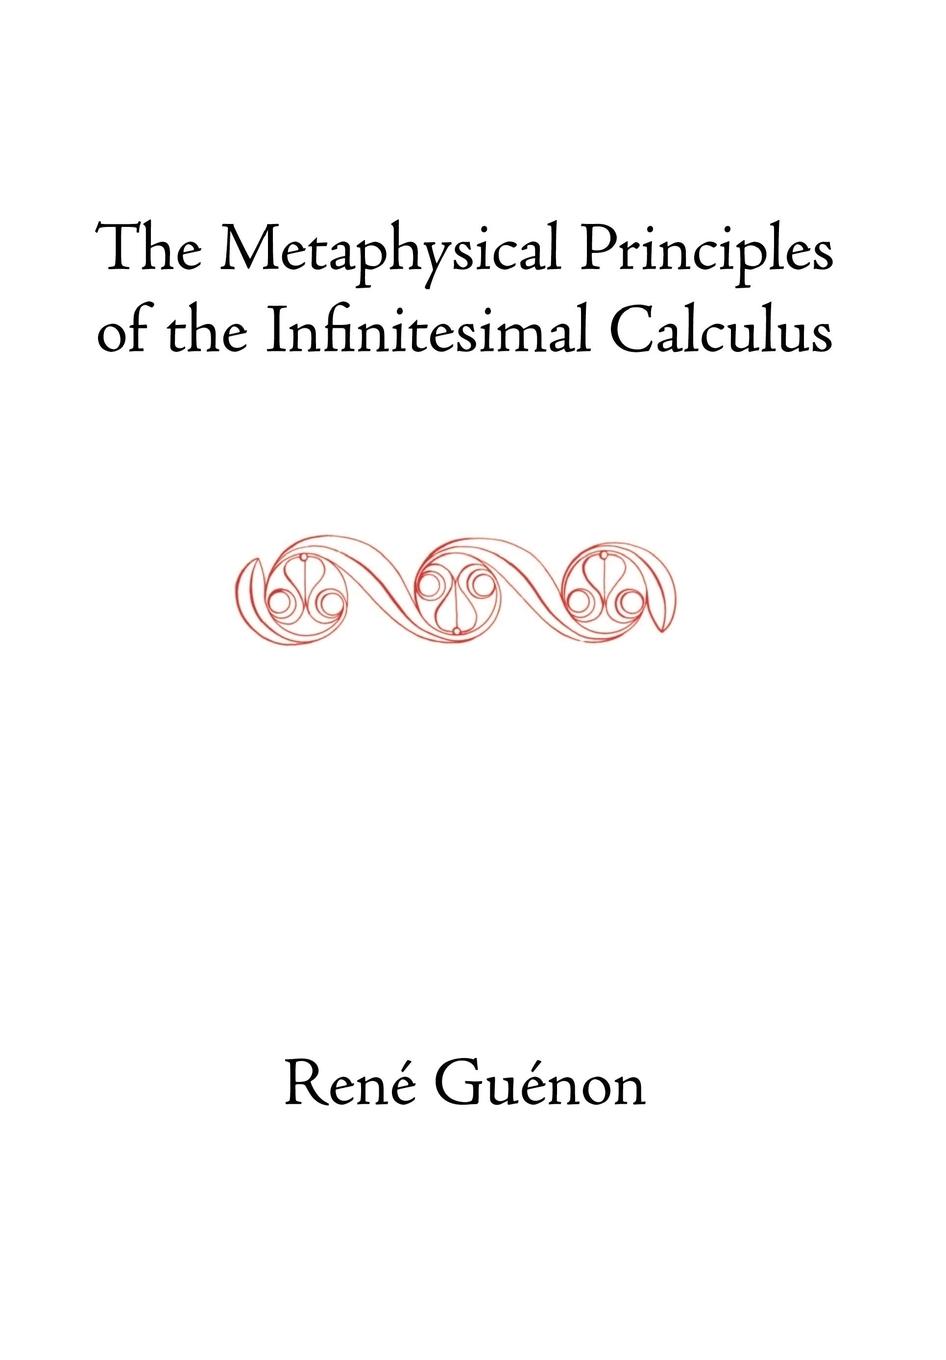 The Metaphysical Principles of the Infinitesimal Calculus - Guenon, Rene